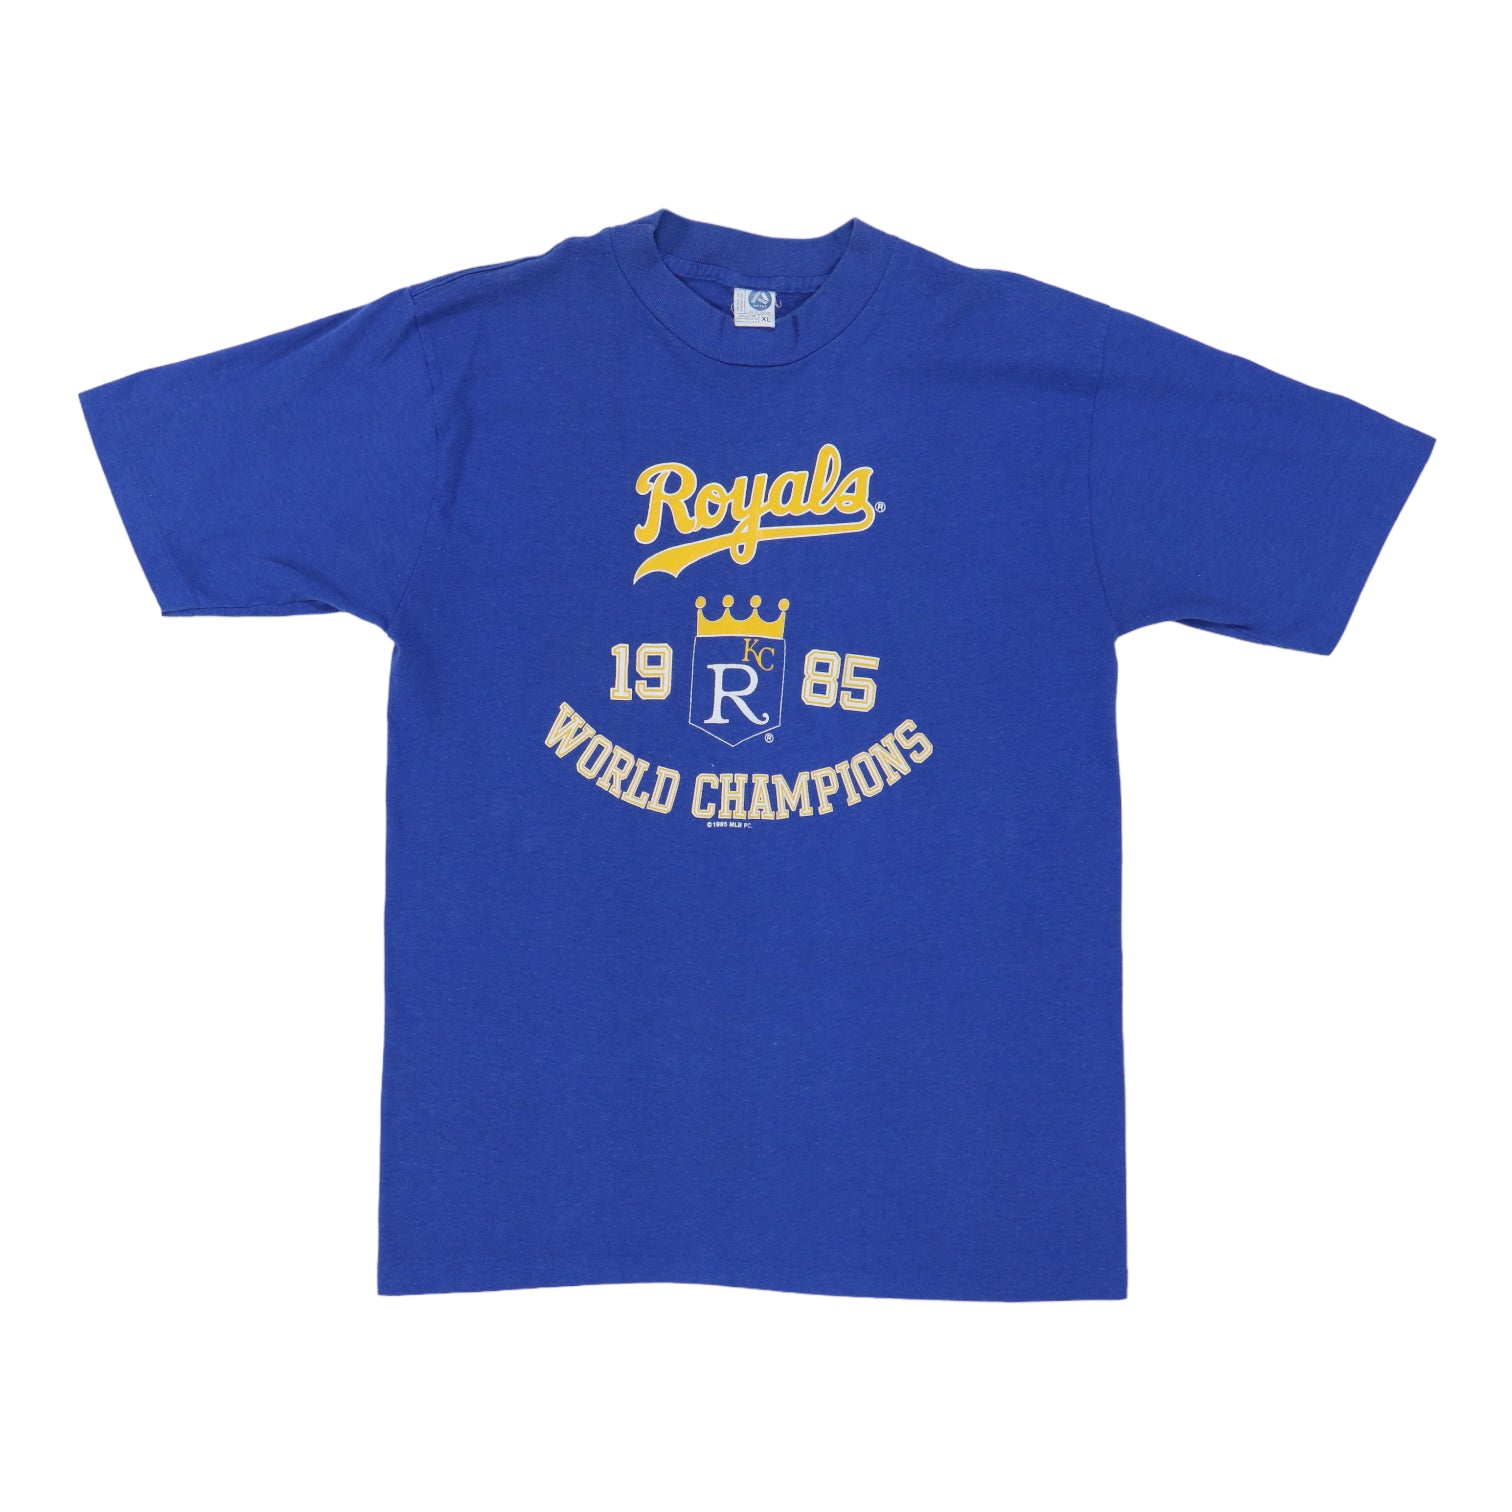 1985 Kansas City Royals World Champions Shirt